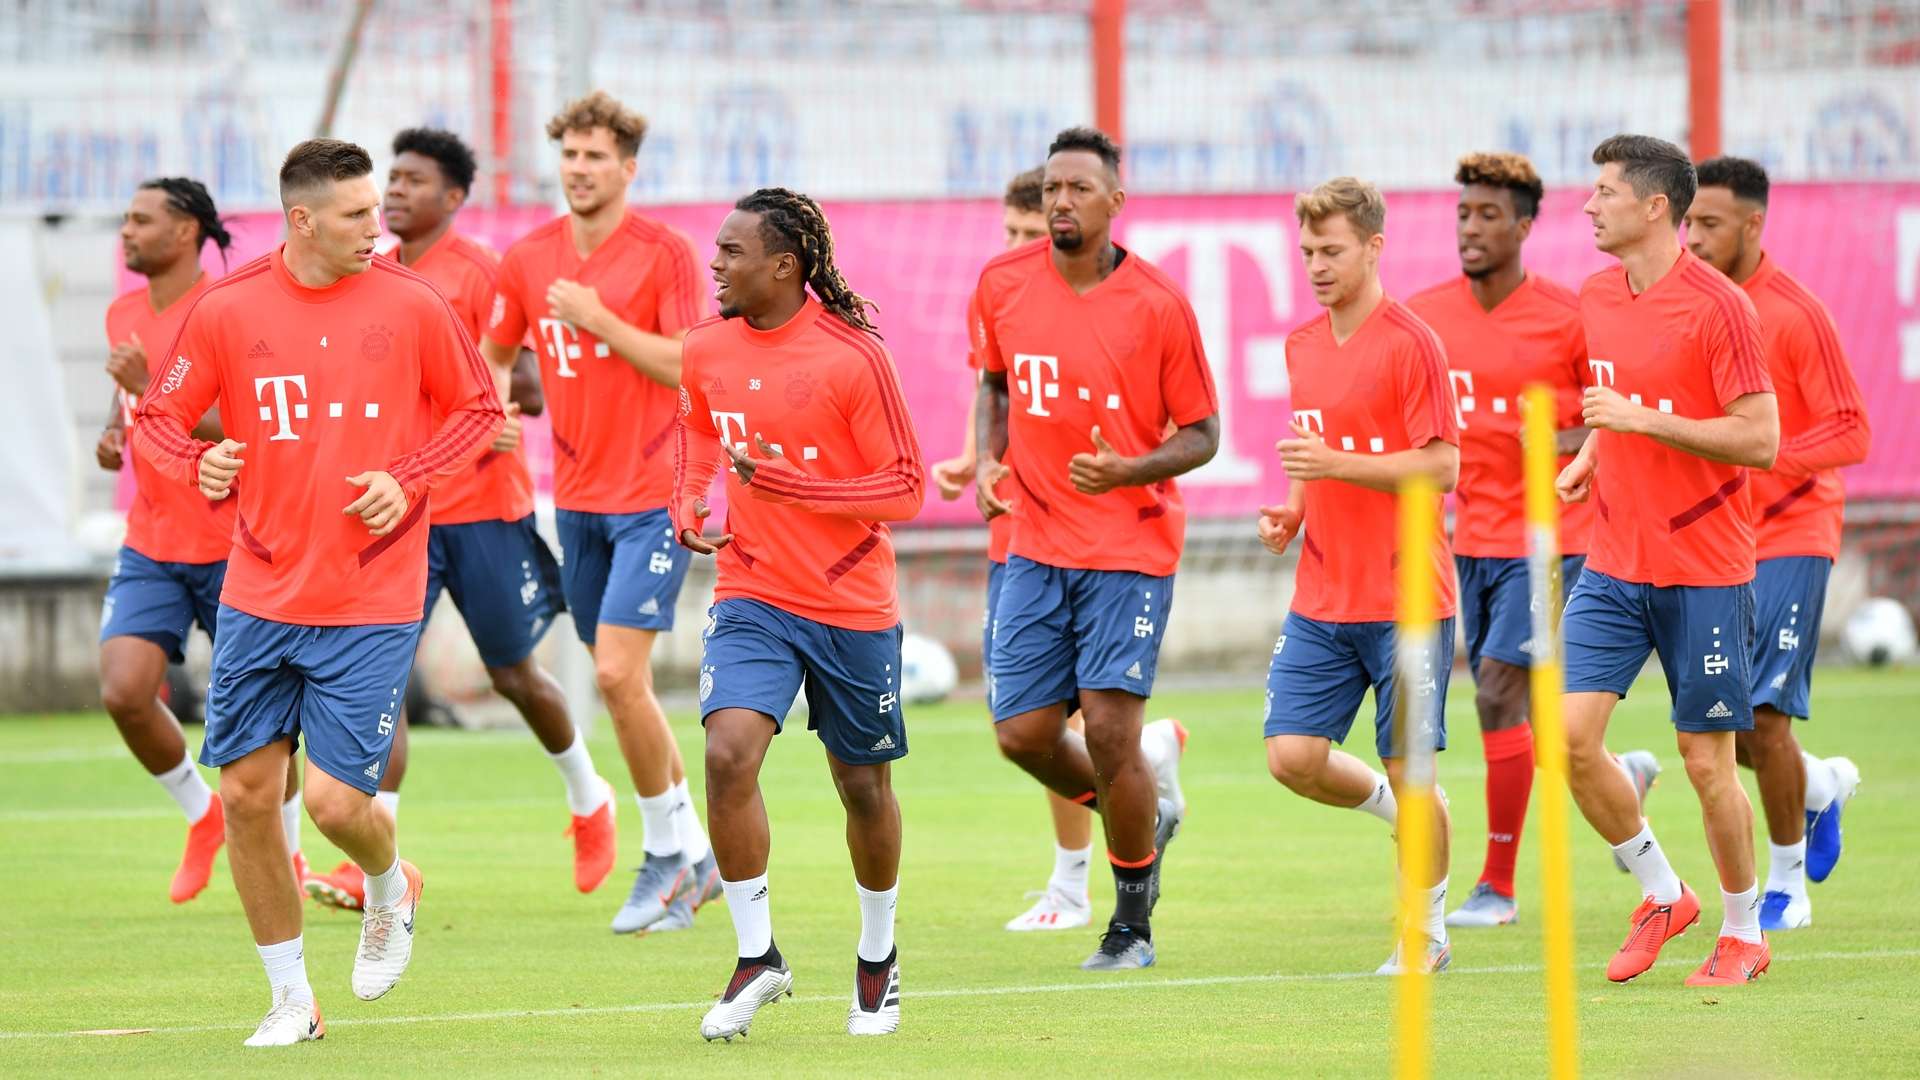 FC Bayern Training Bundesliga 2019